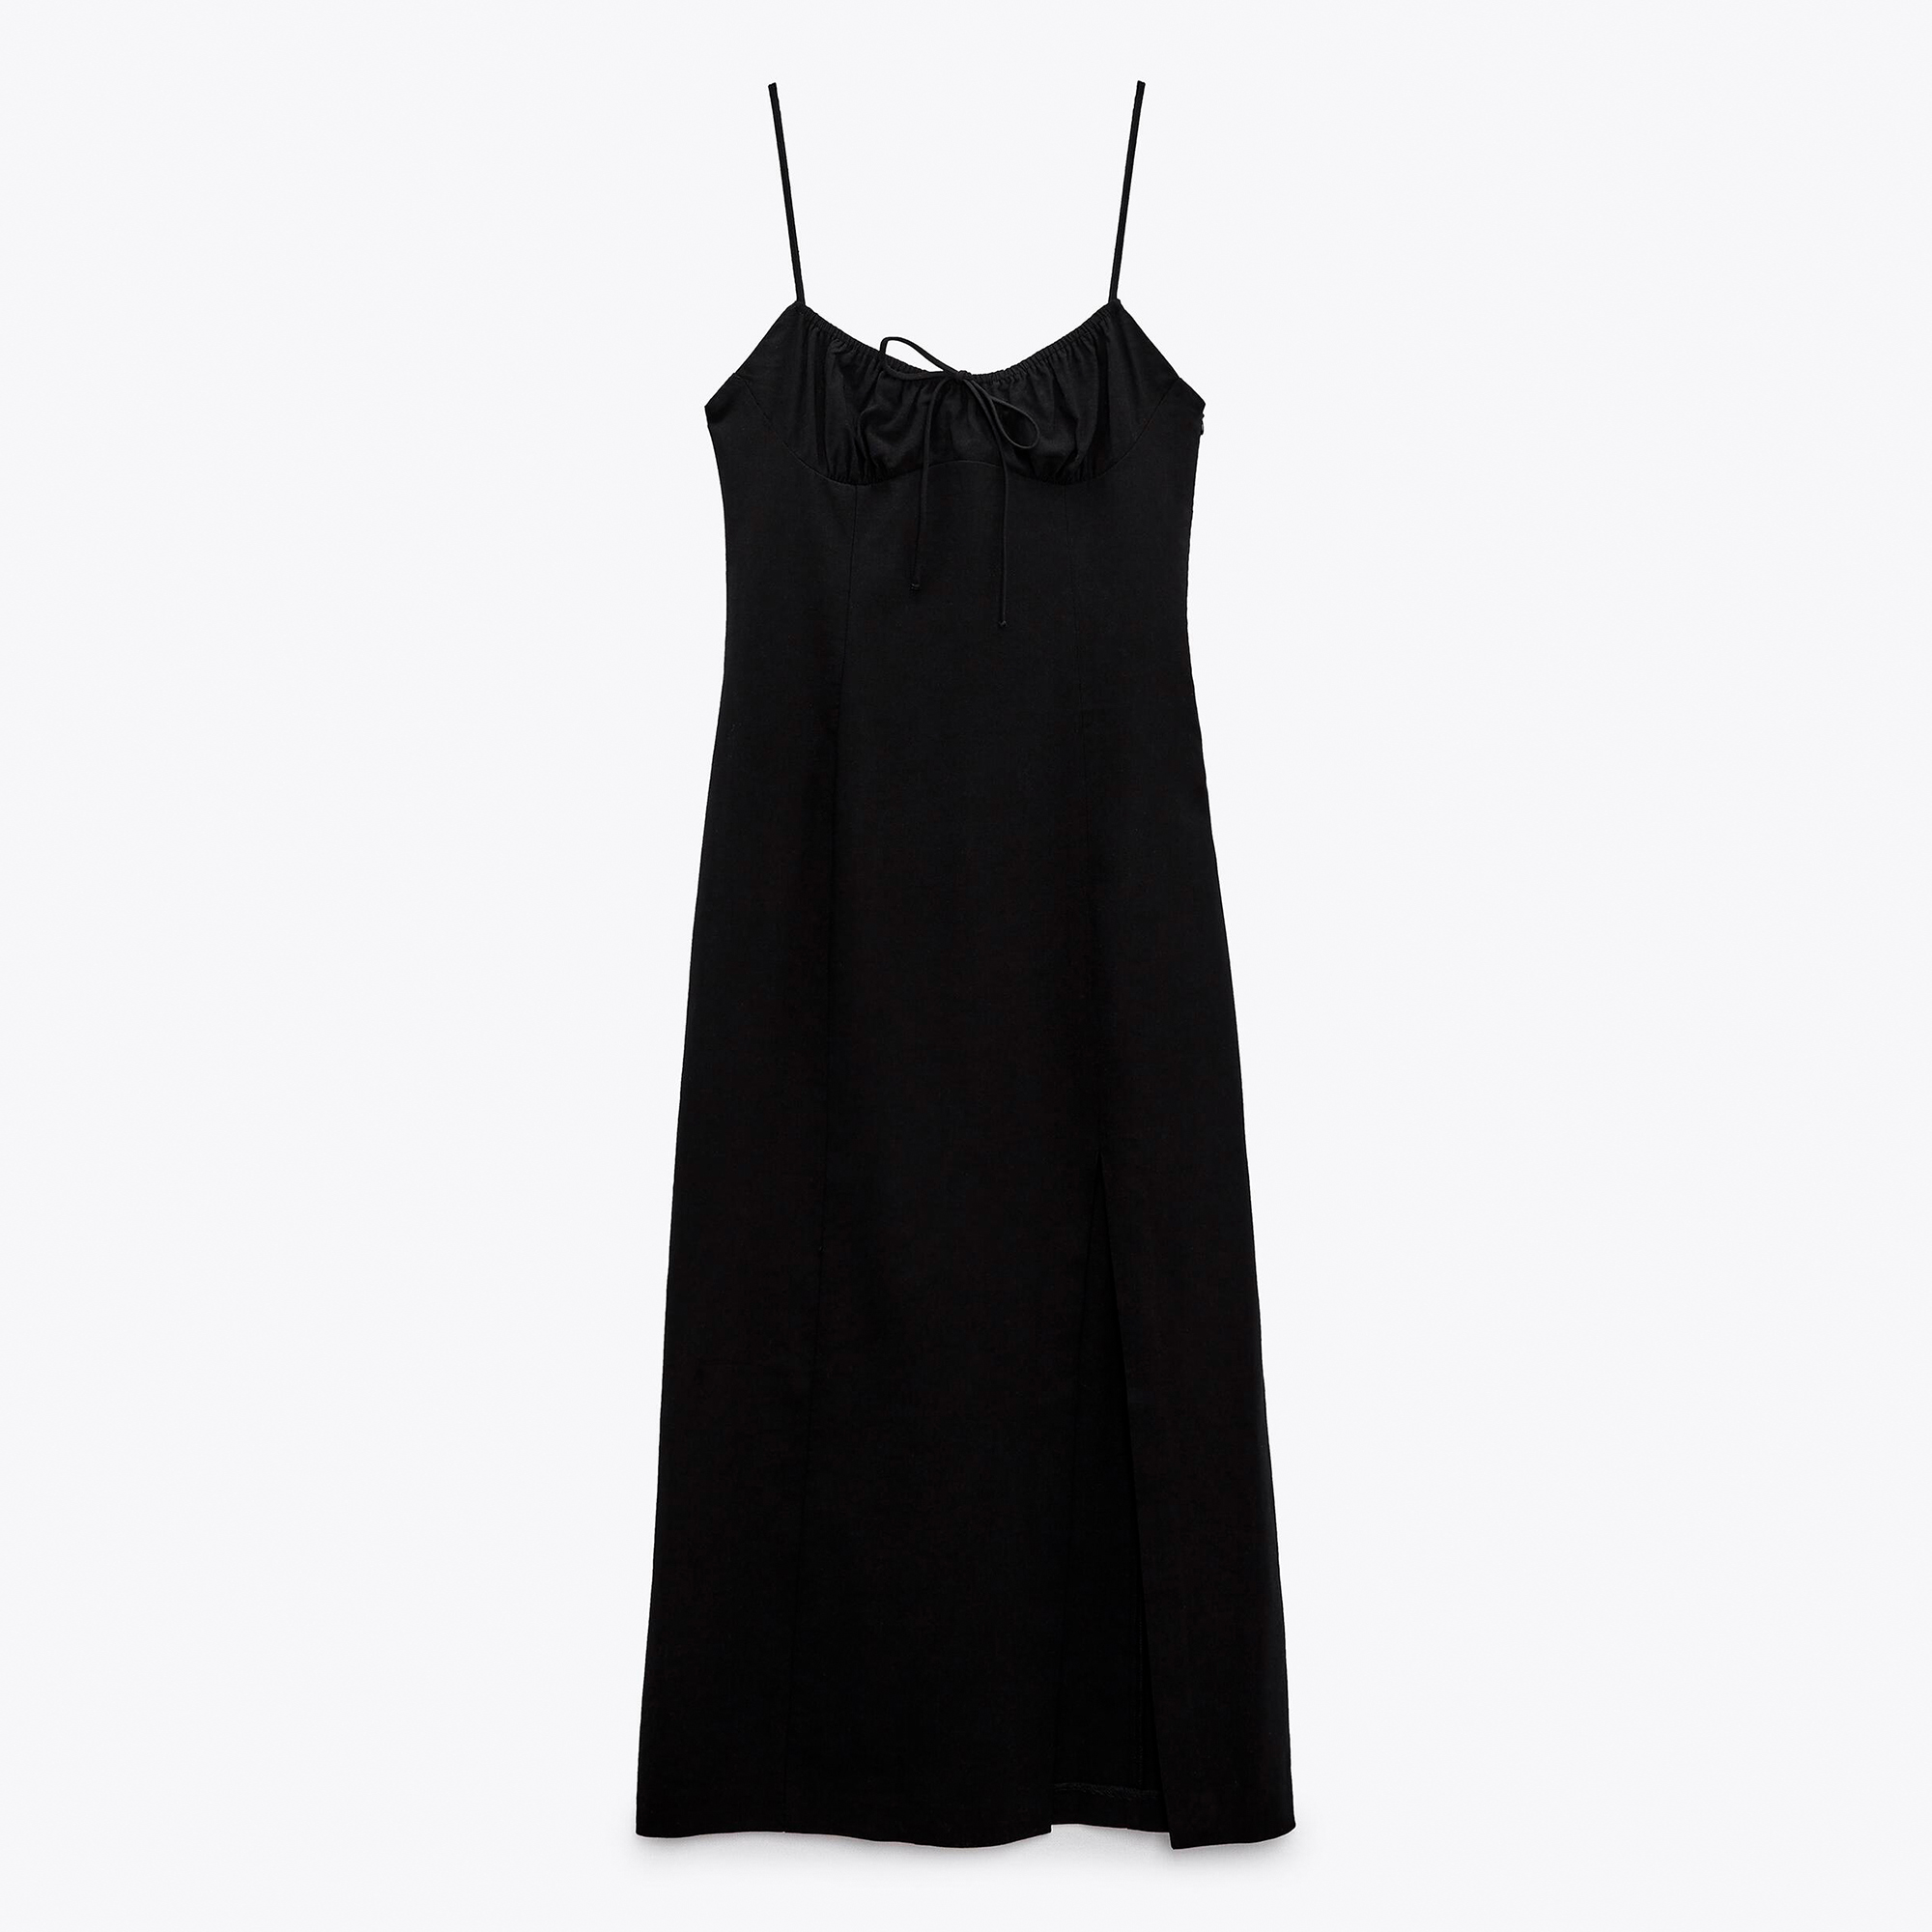 Kleid - Midi-Schnitt - schwarz - Marke: Zara - Veepee